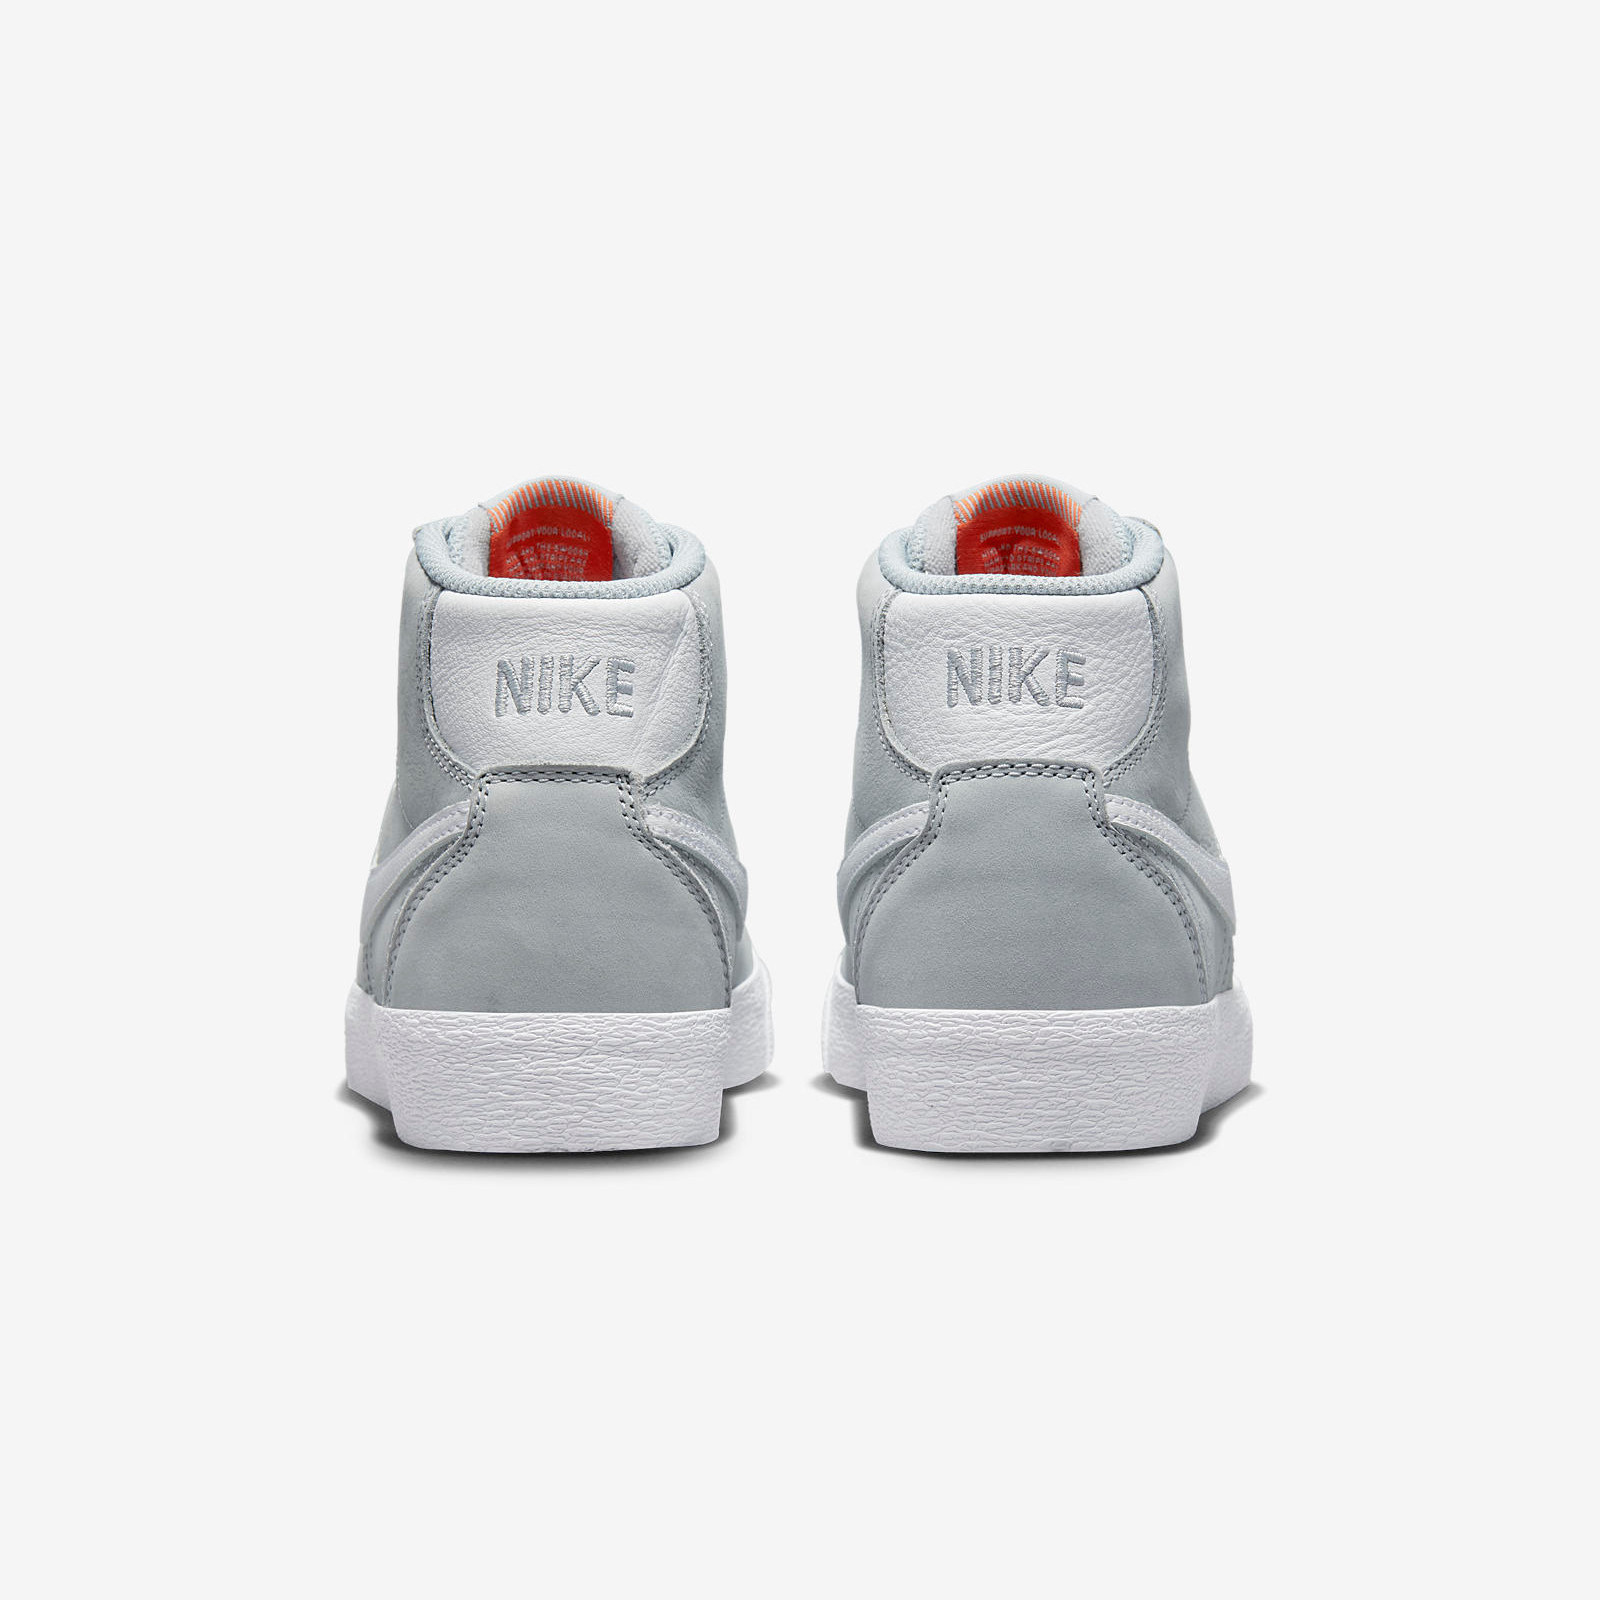 Nike SB Bruin High
« Wolf Grey »